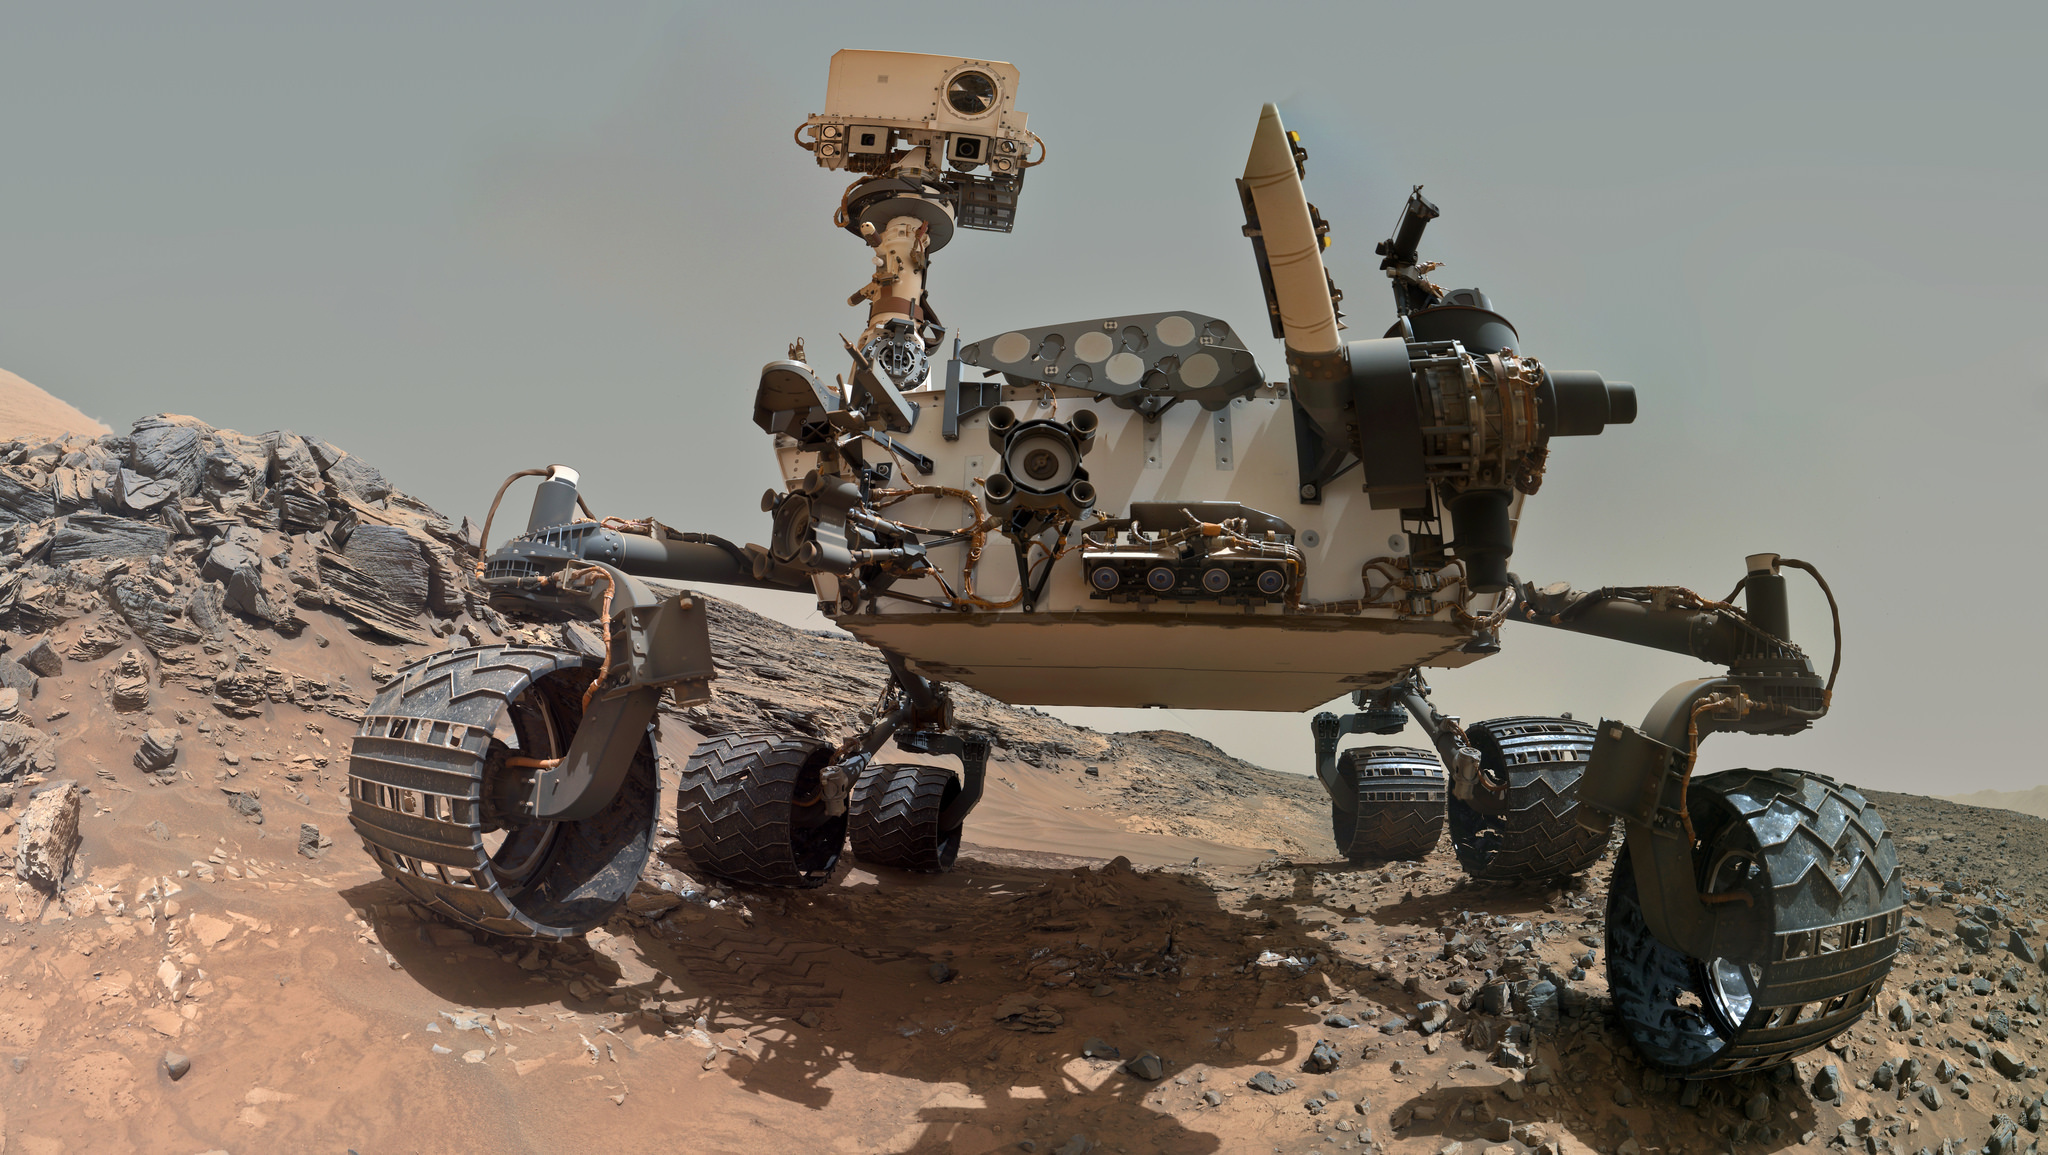 Wallpaper Curiosity Rover Mars Space